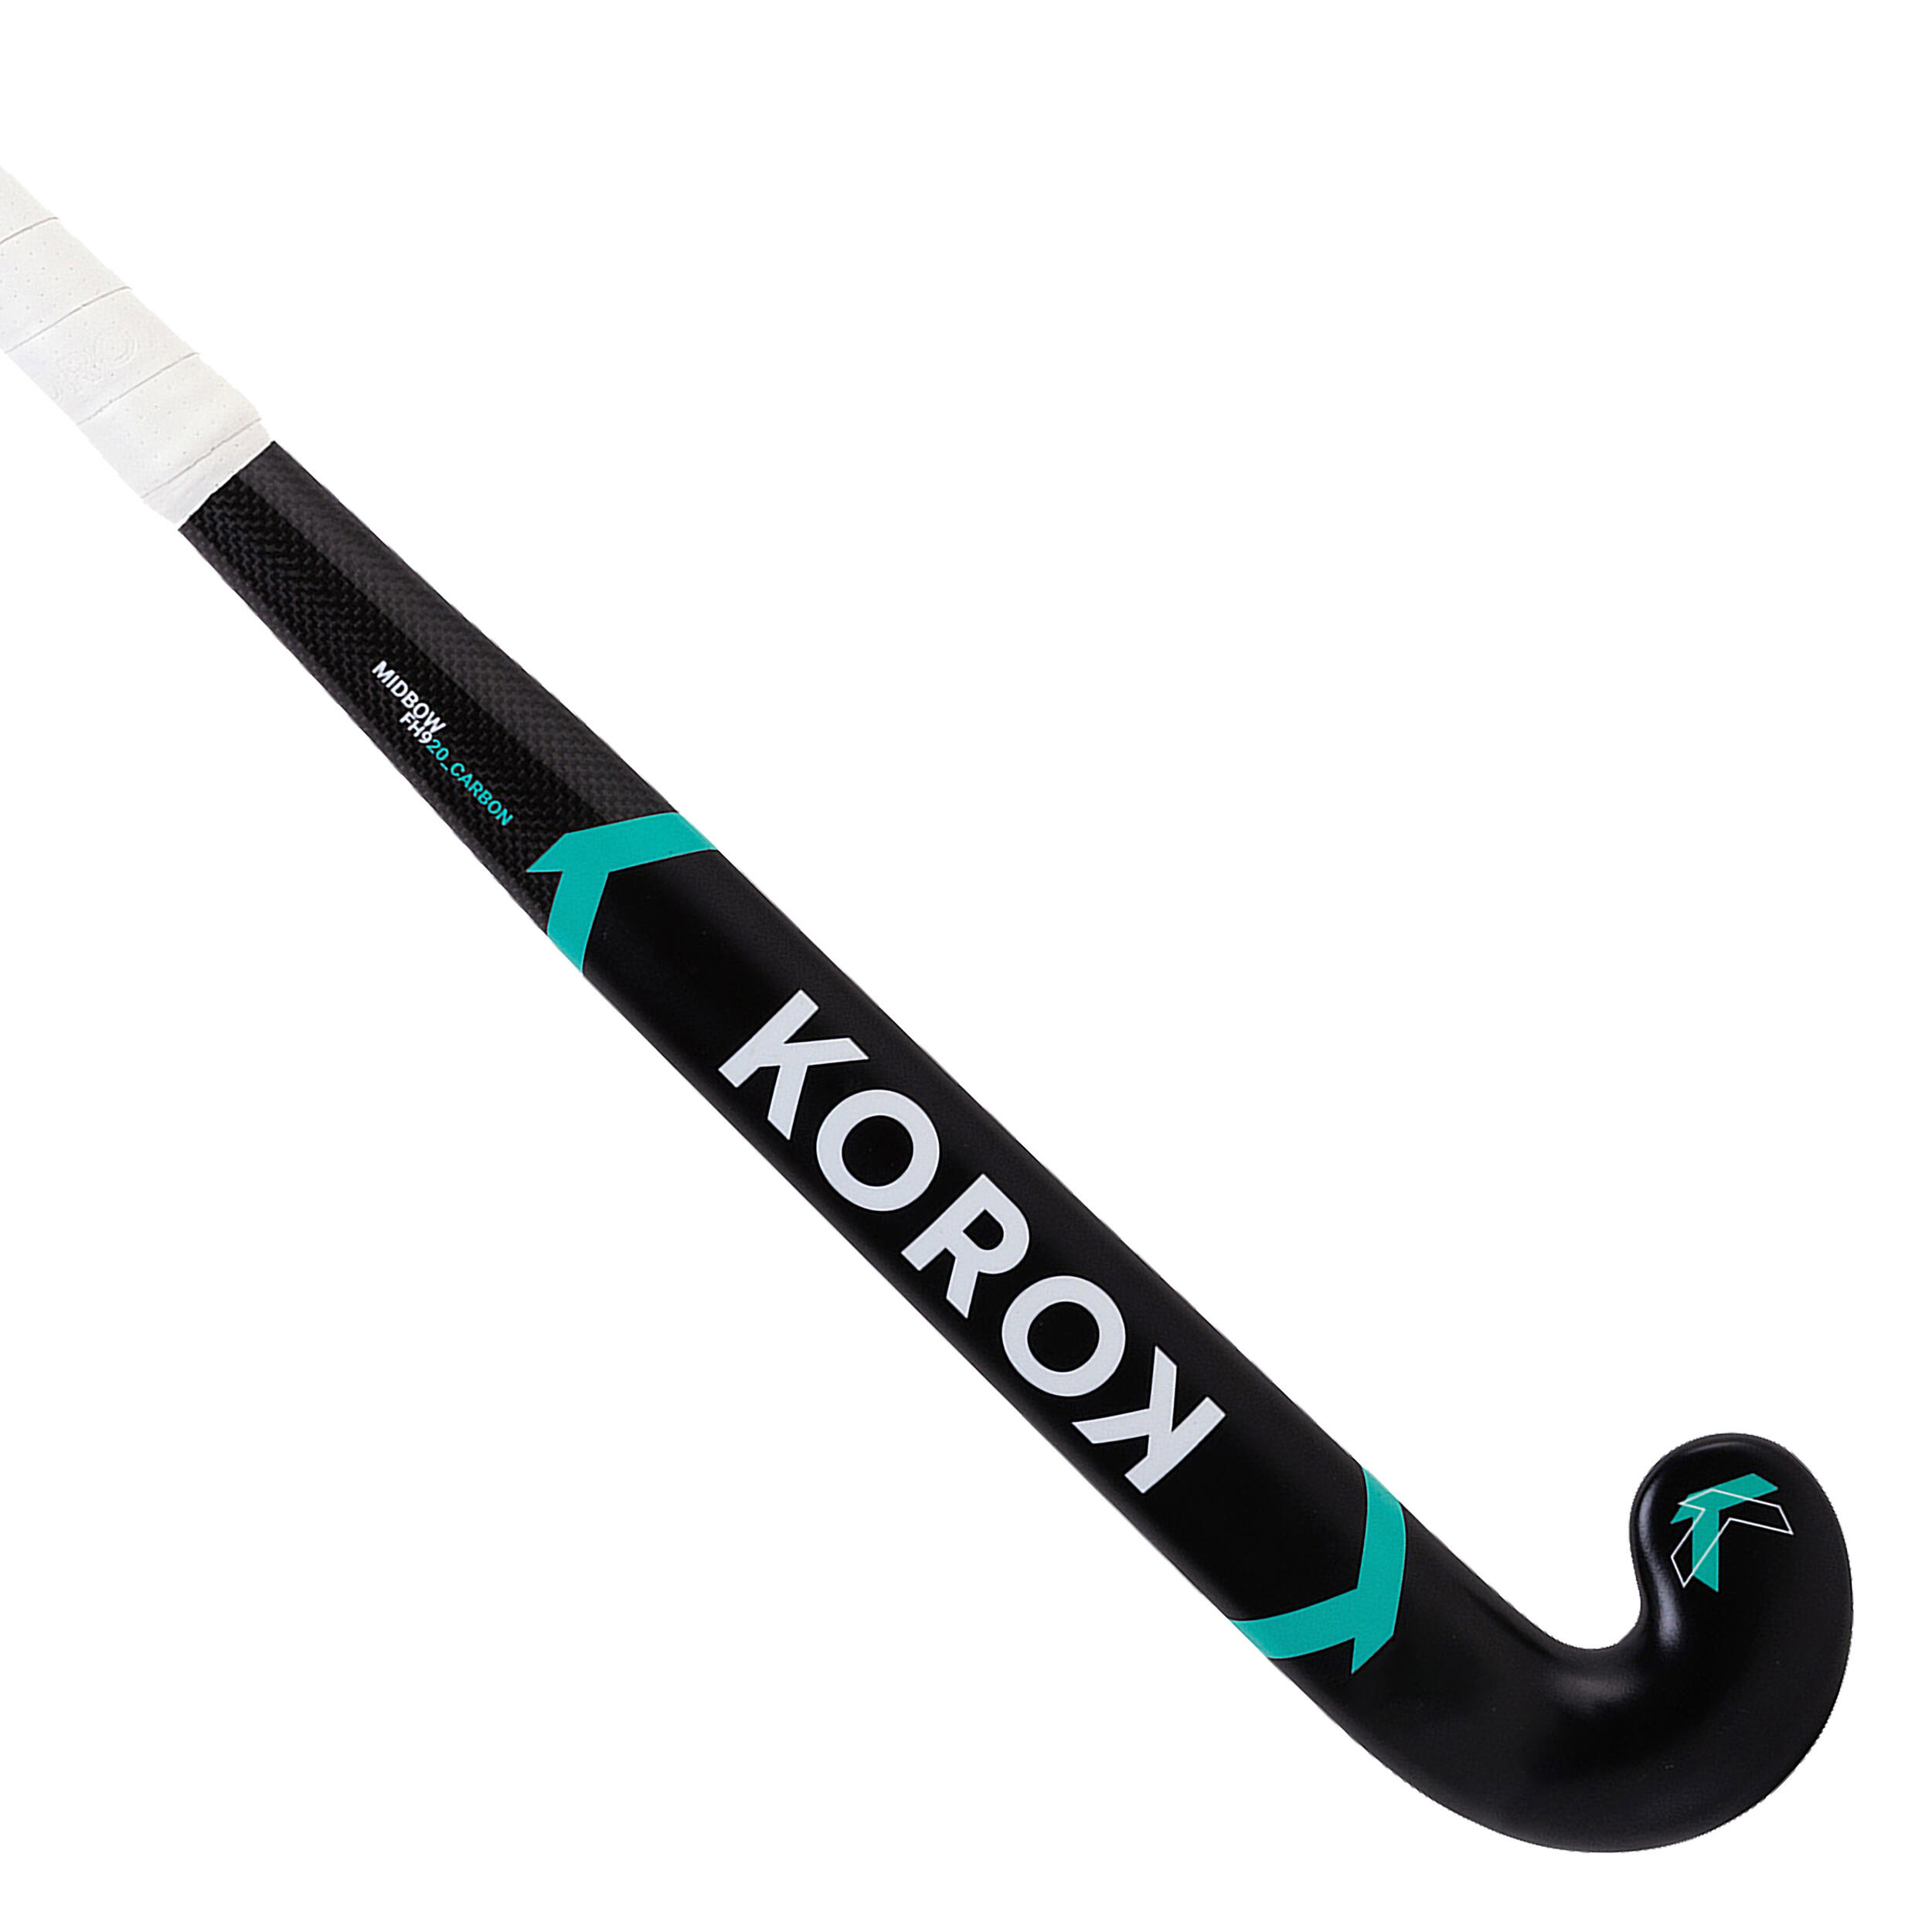 KOROK Kids' 20% Carbon Mid Bow Field Hockey Stick FH920 - Black/Turquoise